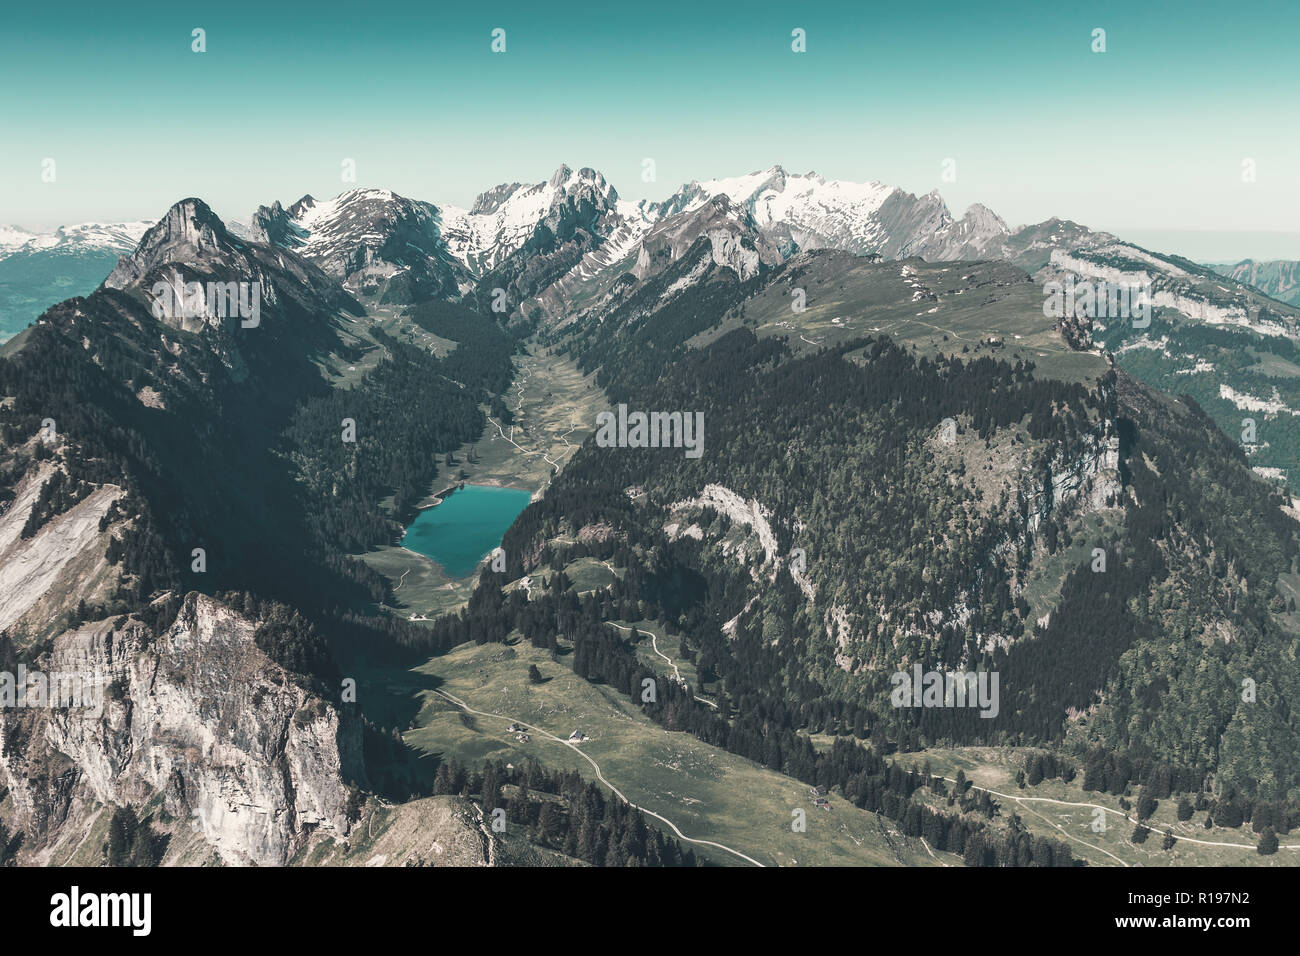 Panorama view of Alpstein mountain with lake of Seealp. Canton of Appenzellerland, Switzerland Stock Photo